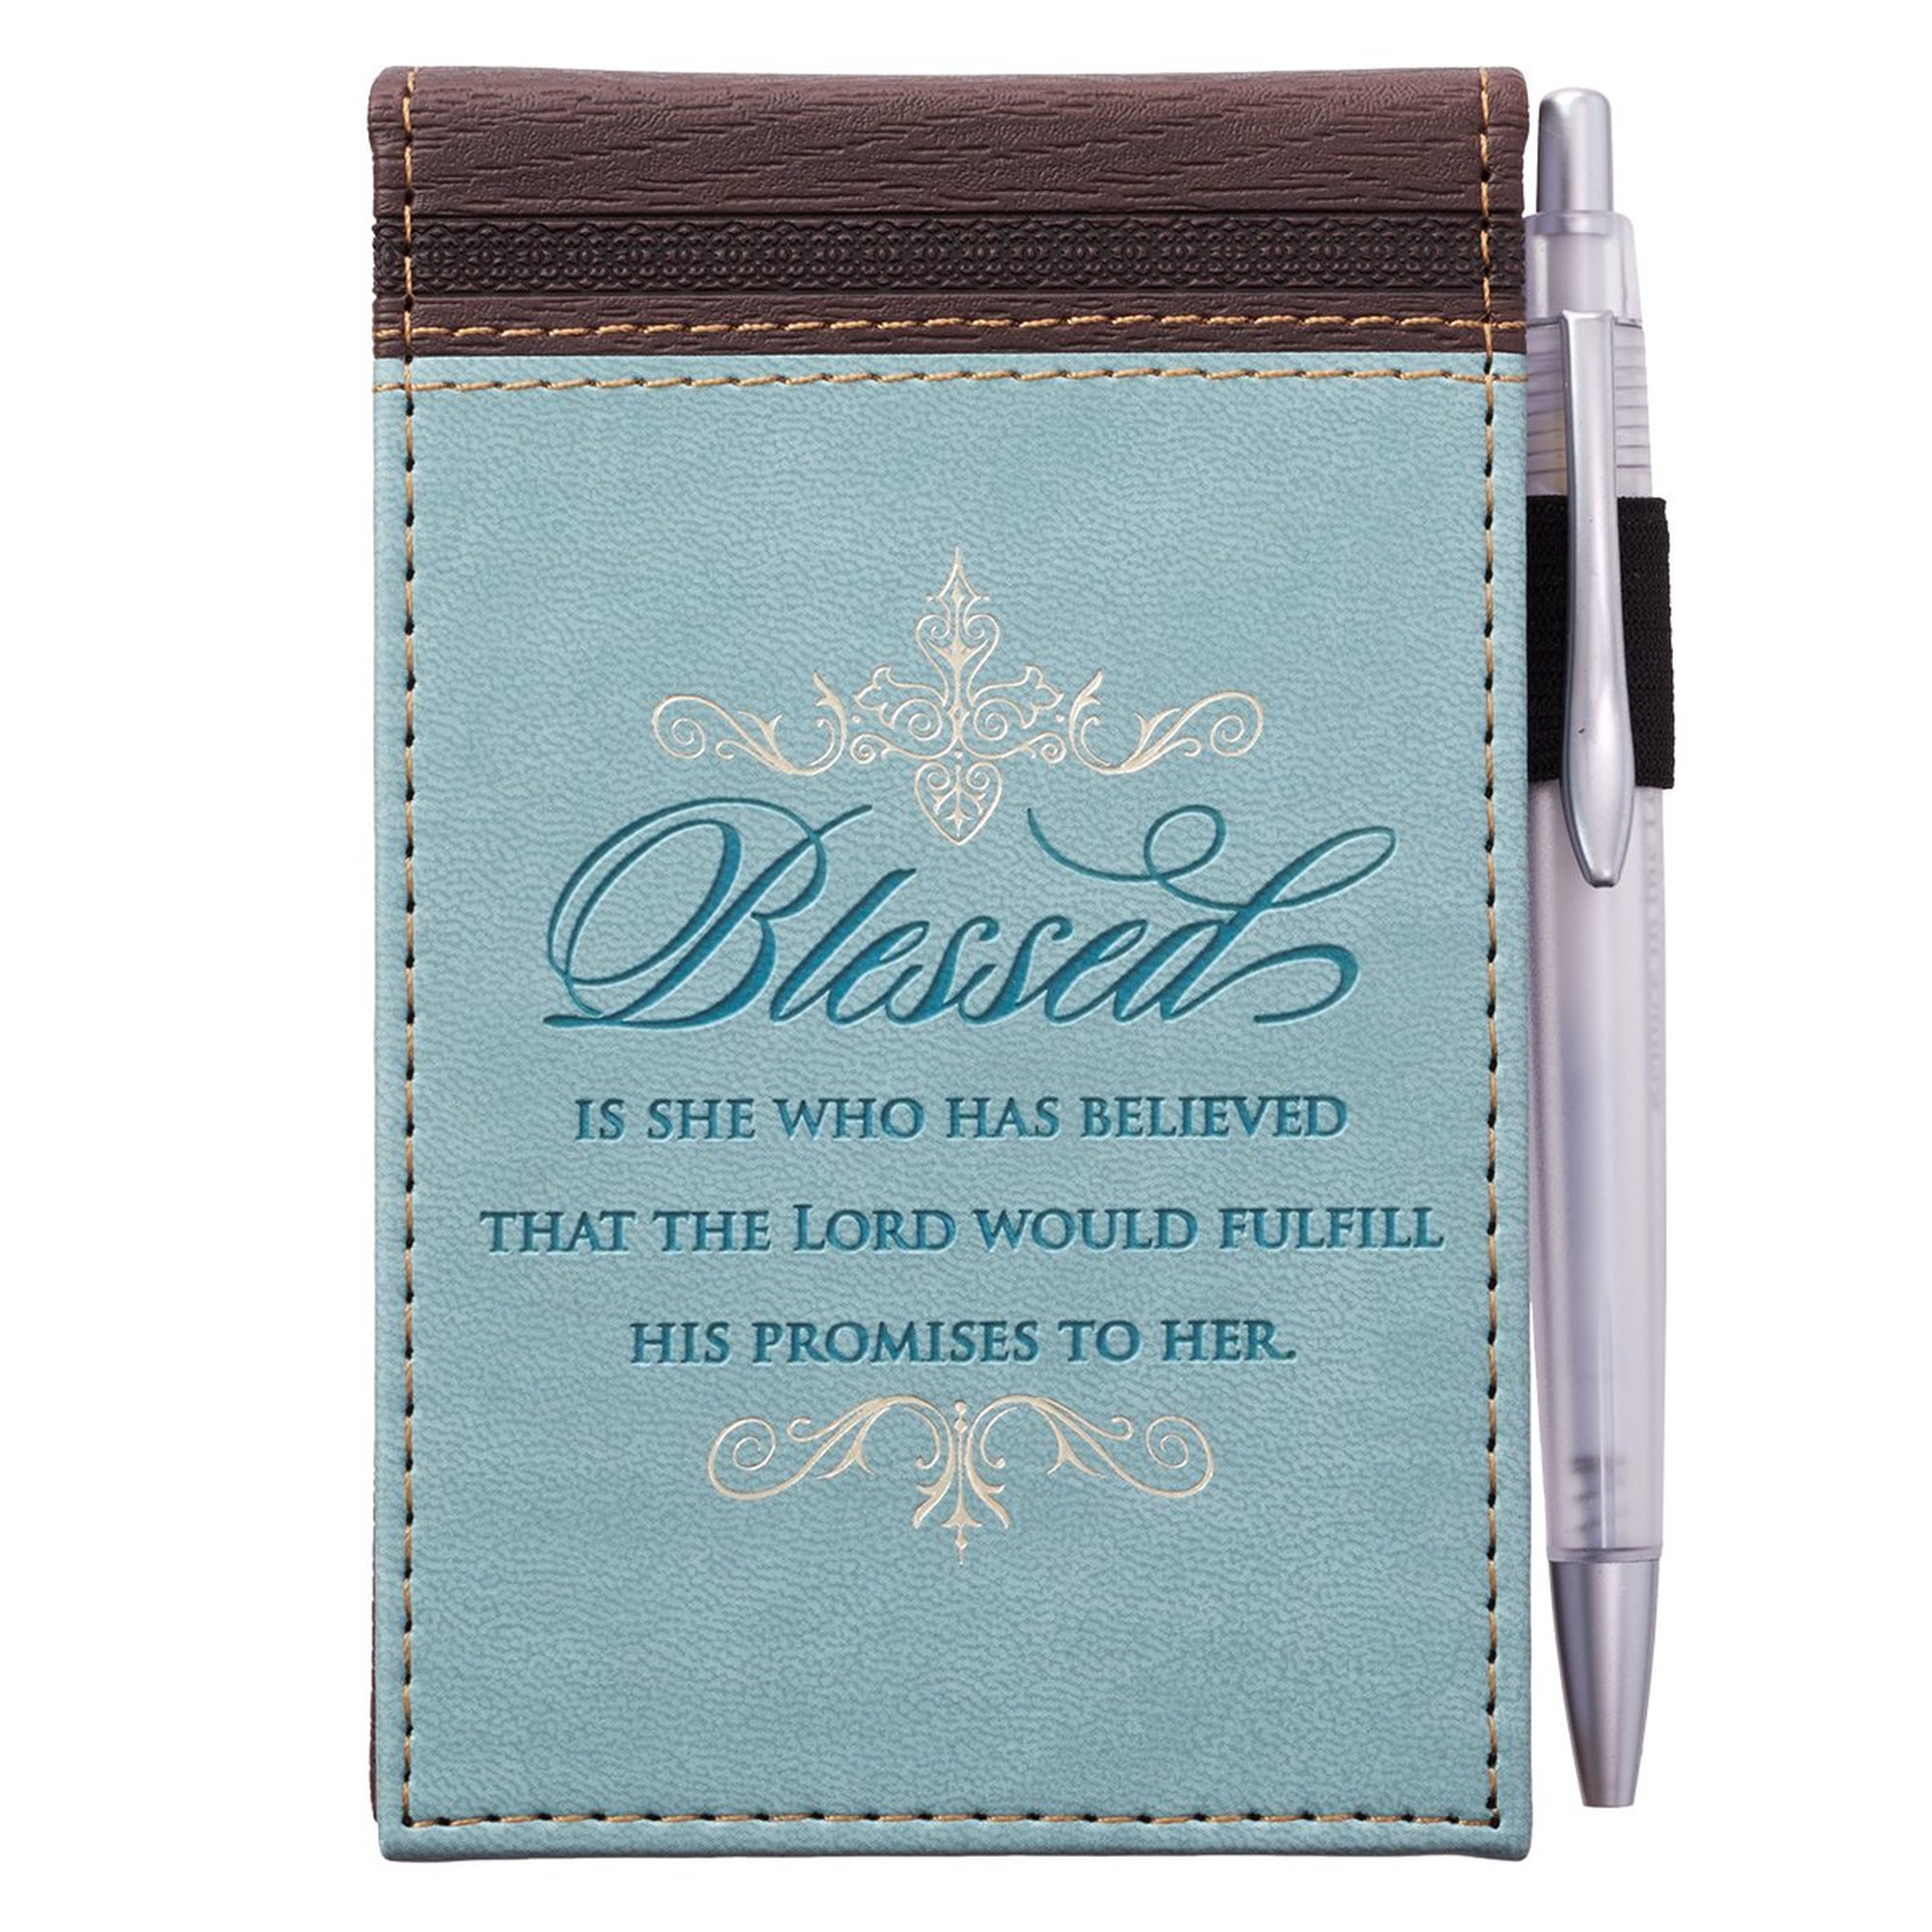 Blessed LuxLeather Pocket Notepad - Lk 1:45